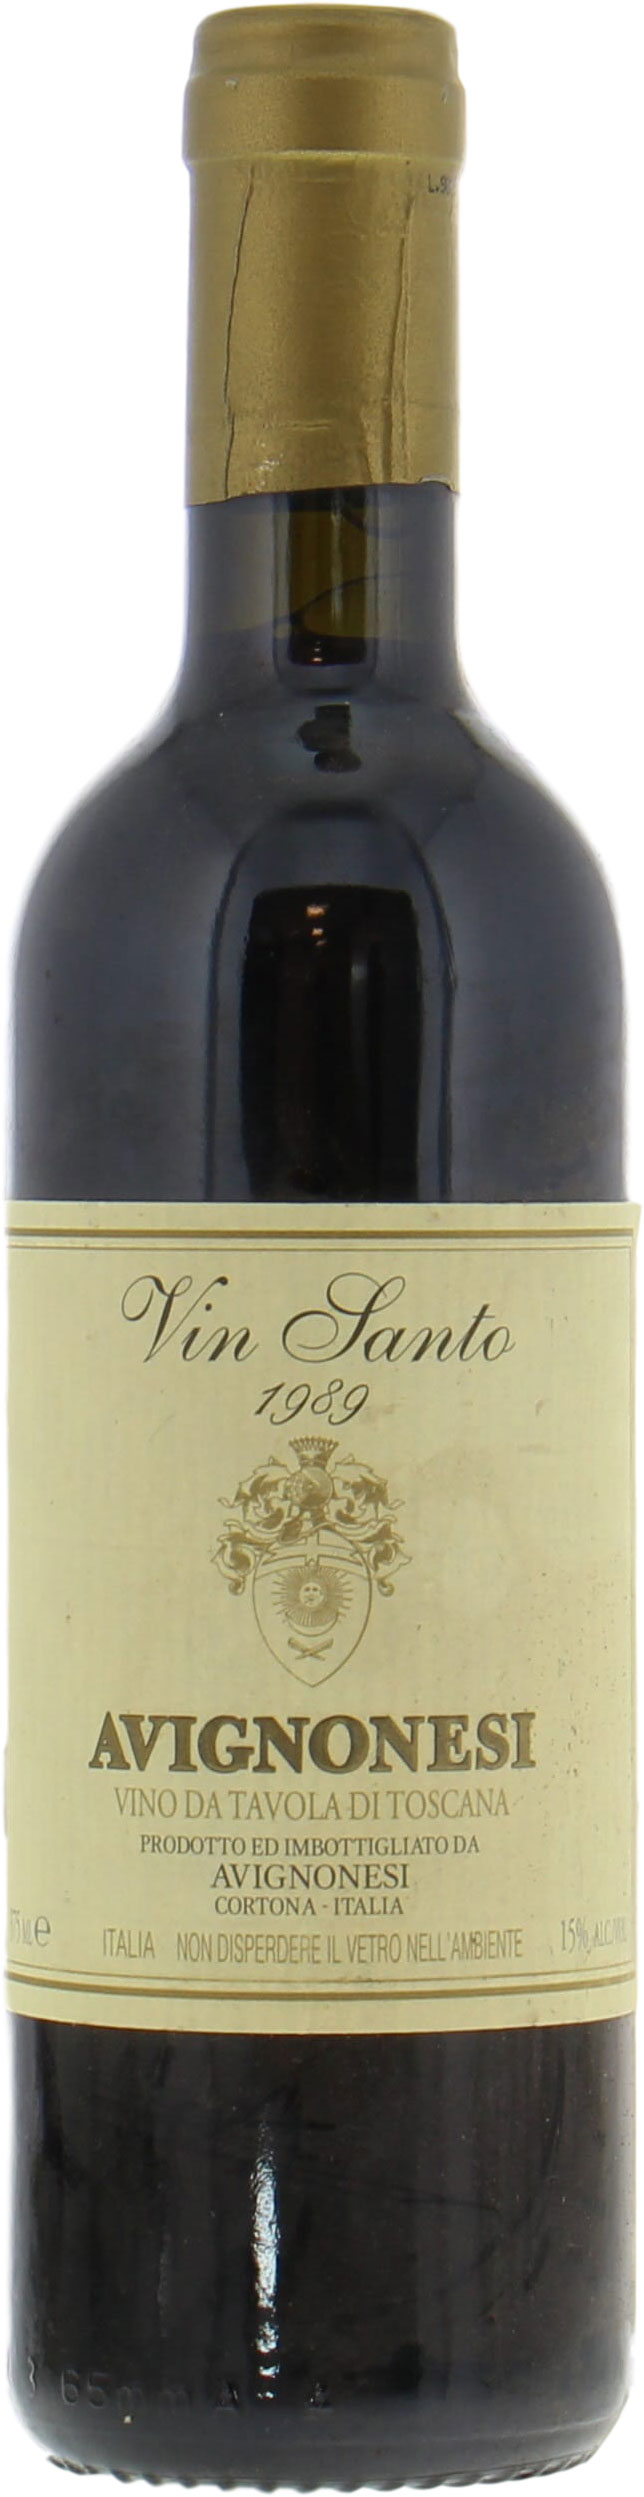 Avignonesi - Vin Santo 1989 Perfect